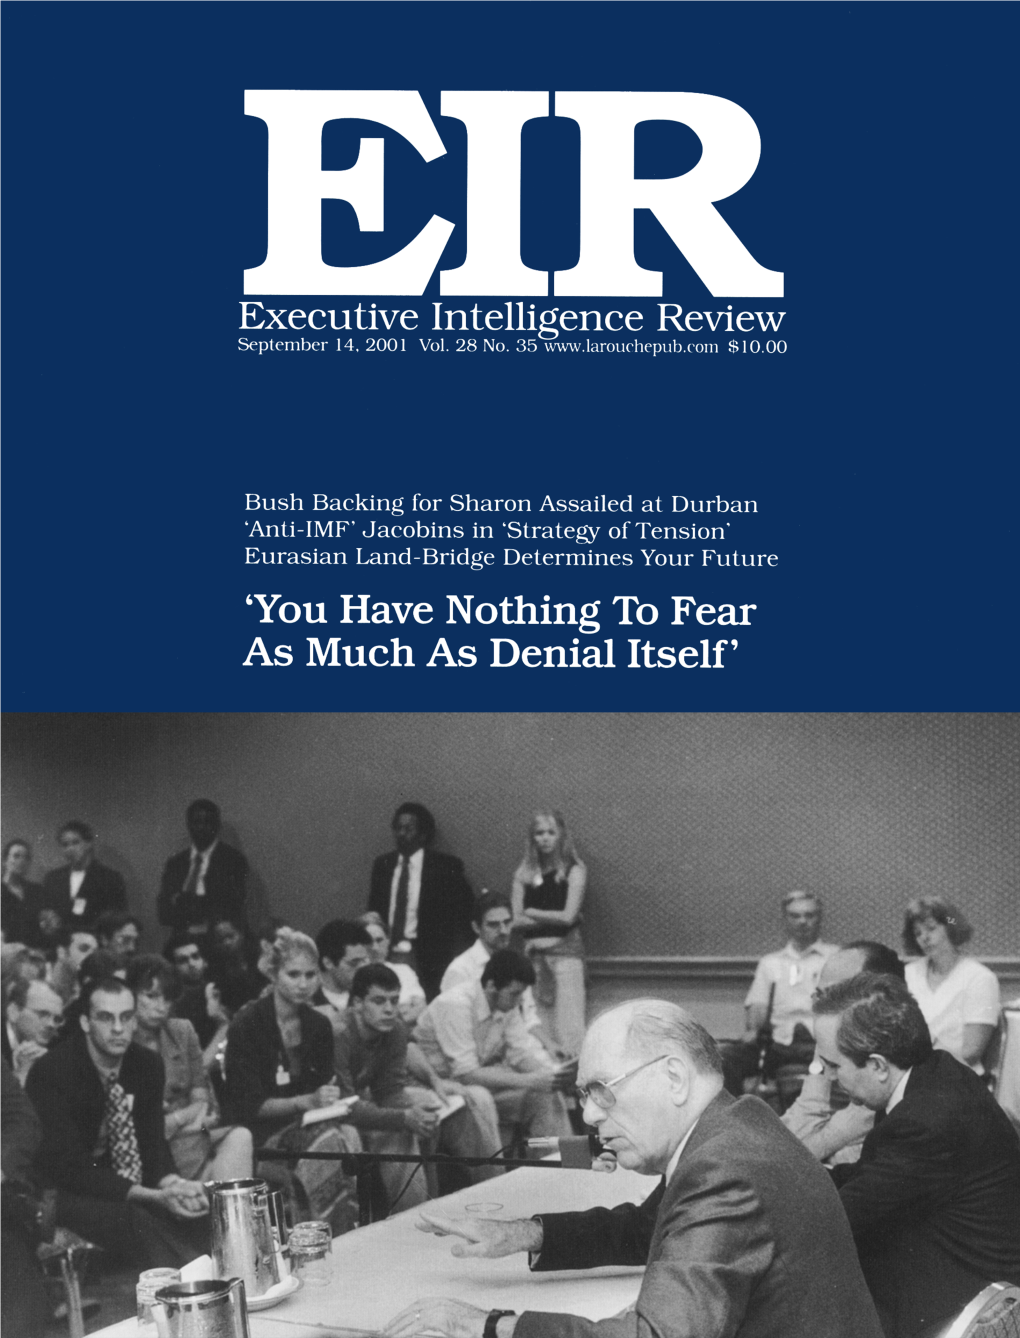 Executive Intelligence Review, Volume 28, Number 35, September